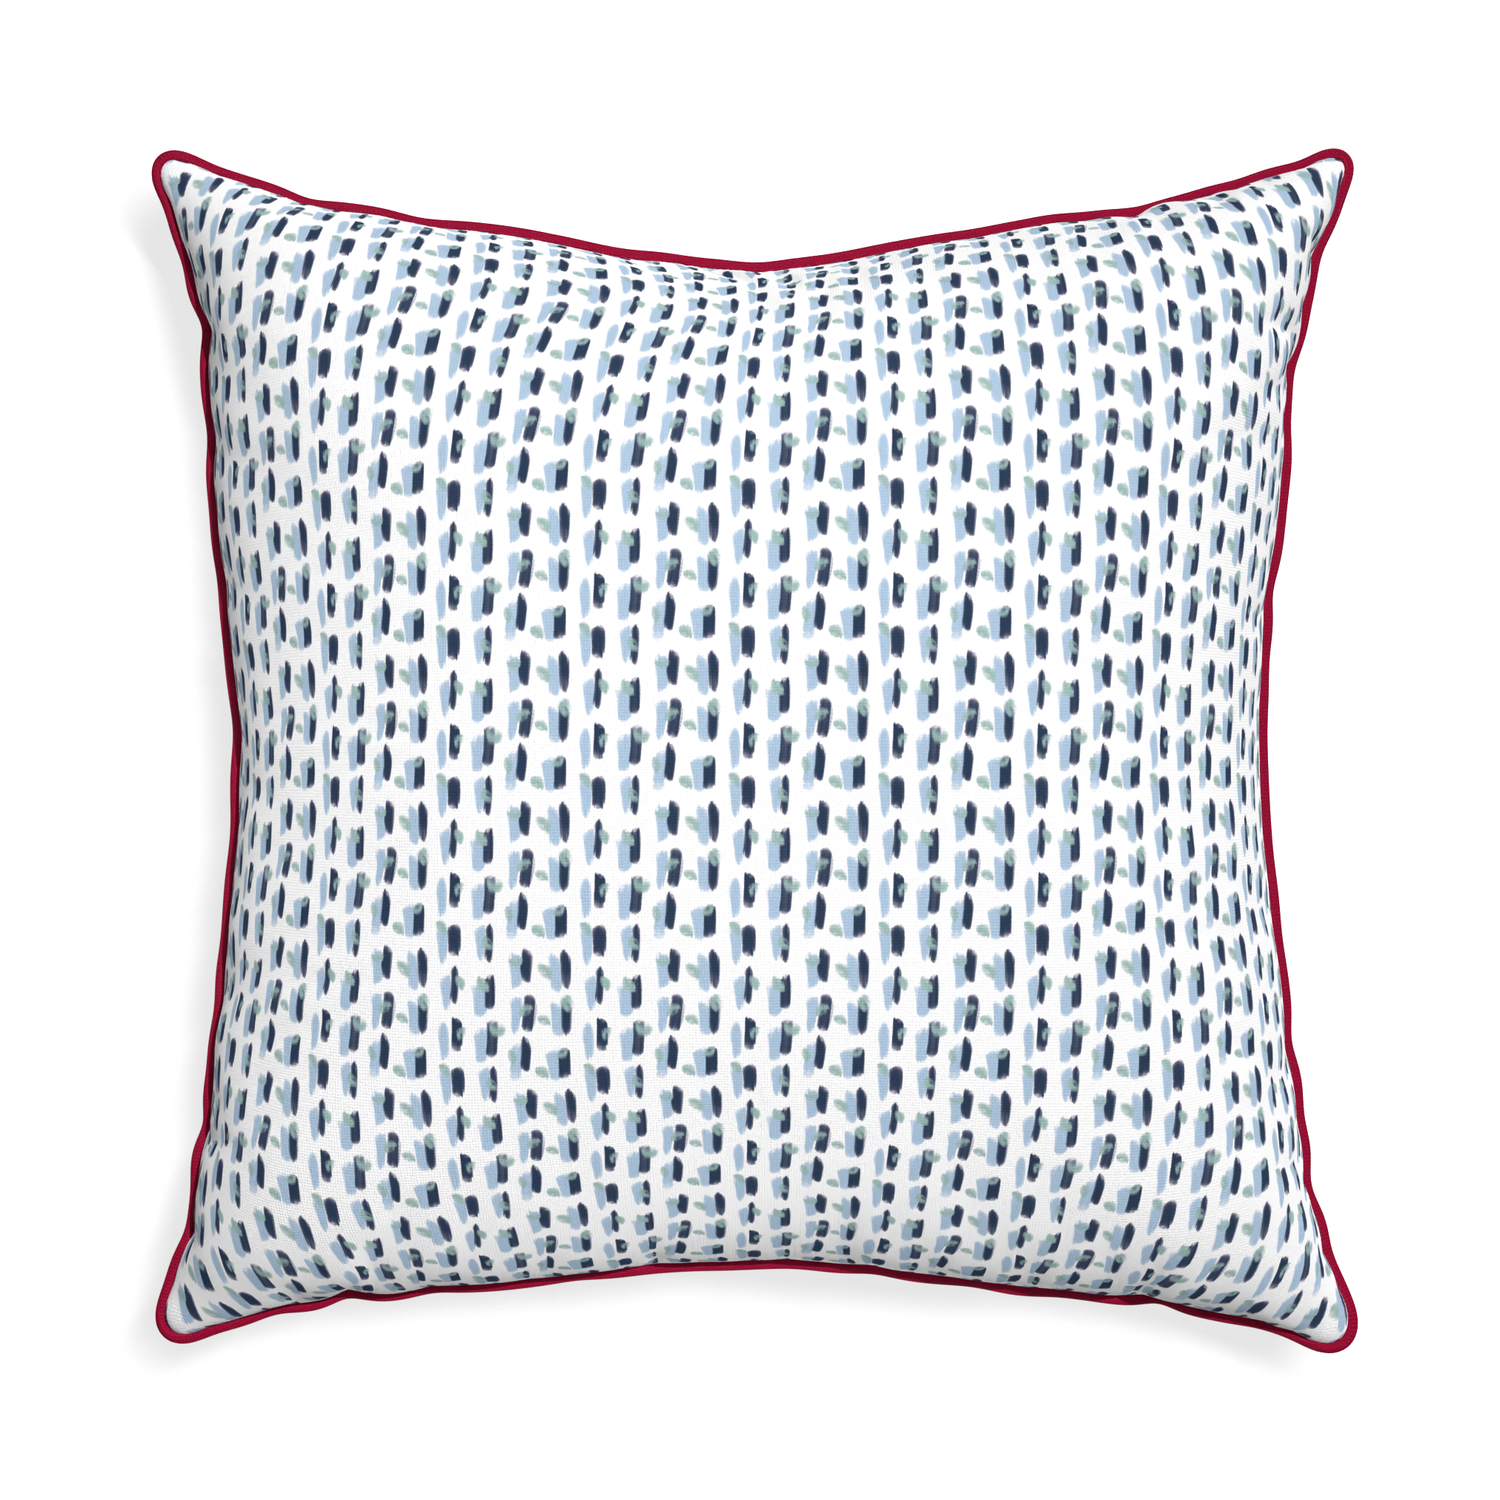 Euro-sham poppy blue custom pillow with raspberry piping on white background